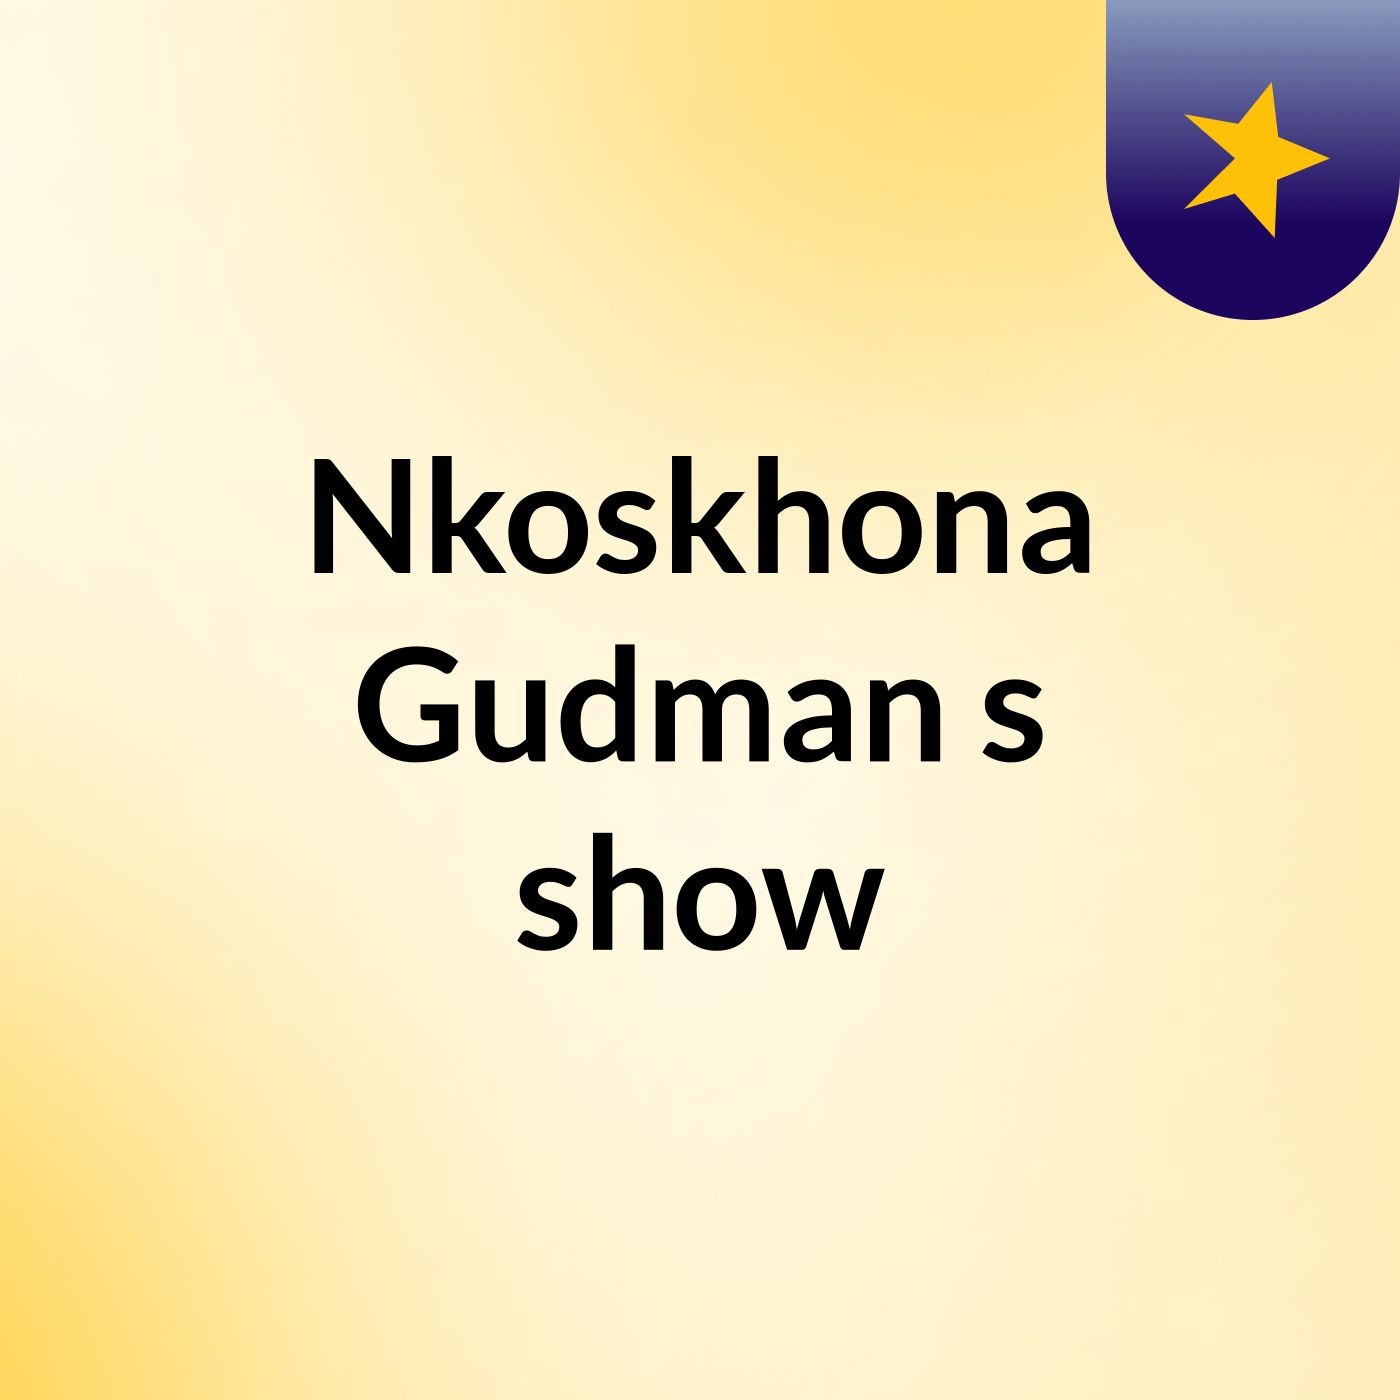 Episode 10 - Nkoskhona Gudman's show